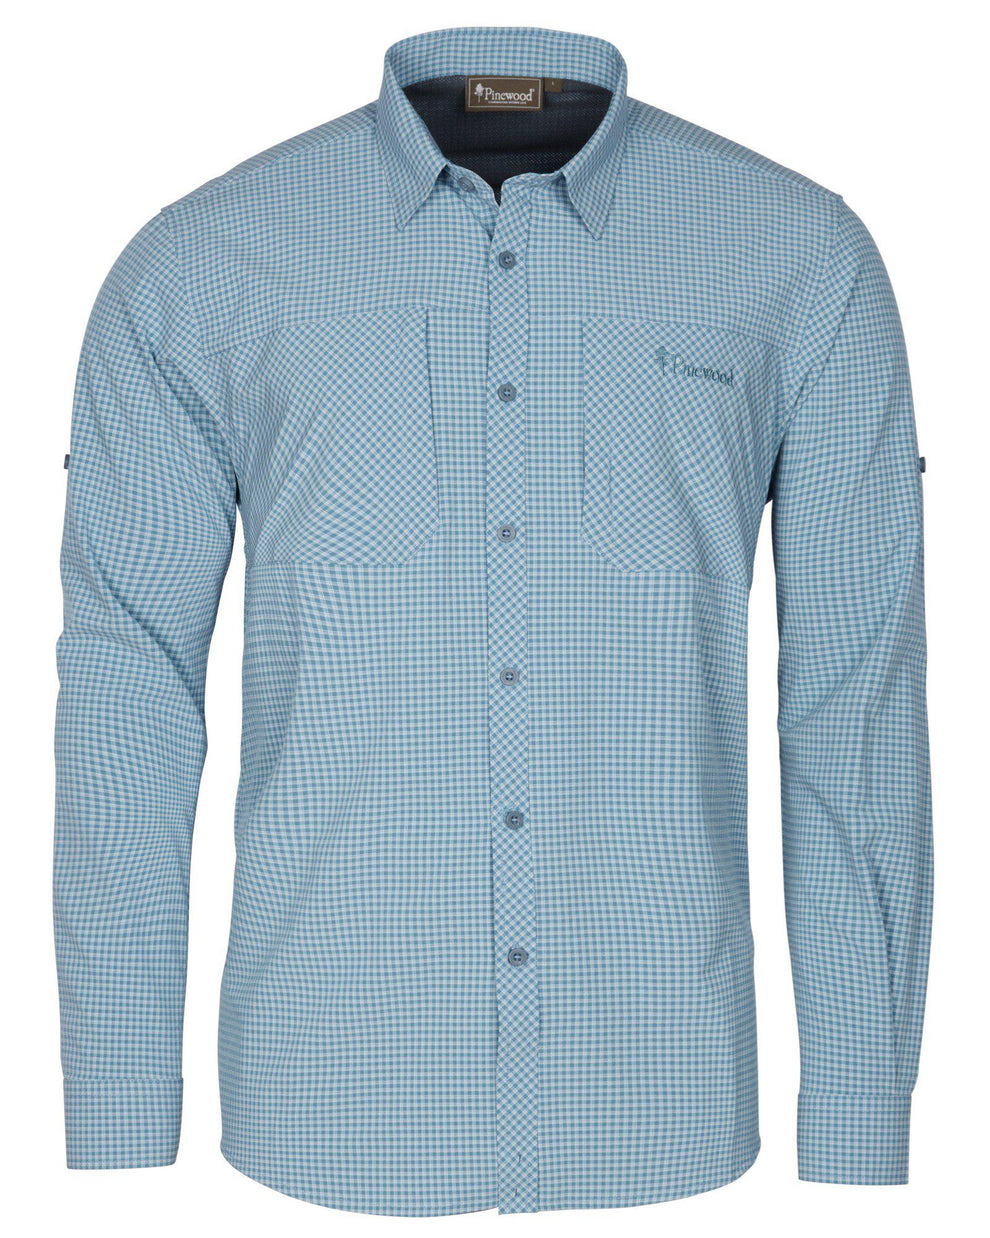 5341-386-01_Pinewood-InsectSafe-Shirt-Mens_Fog-Blue-Offwhite